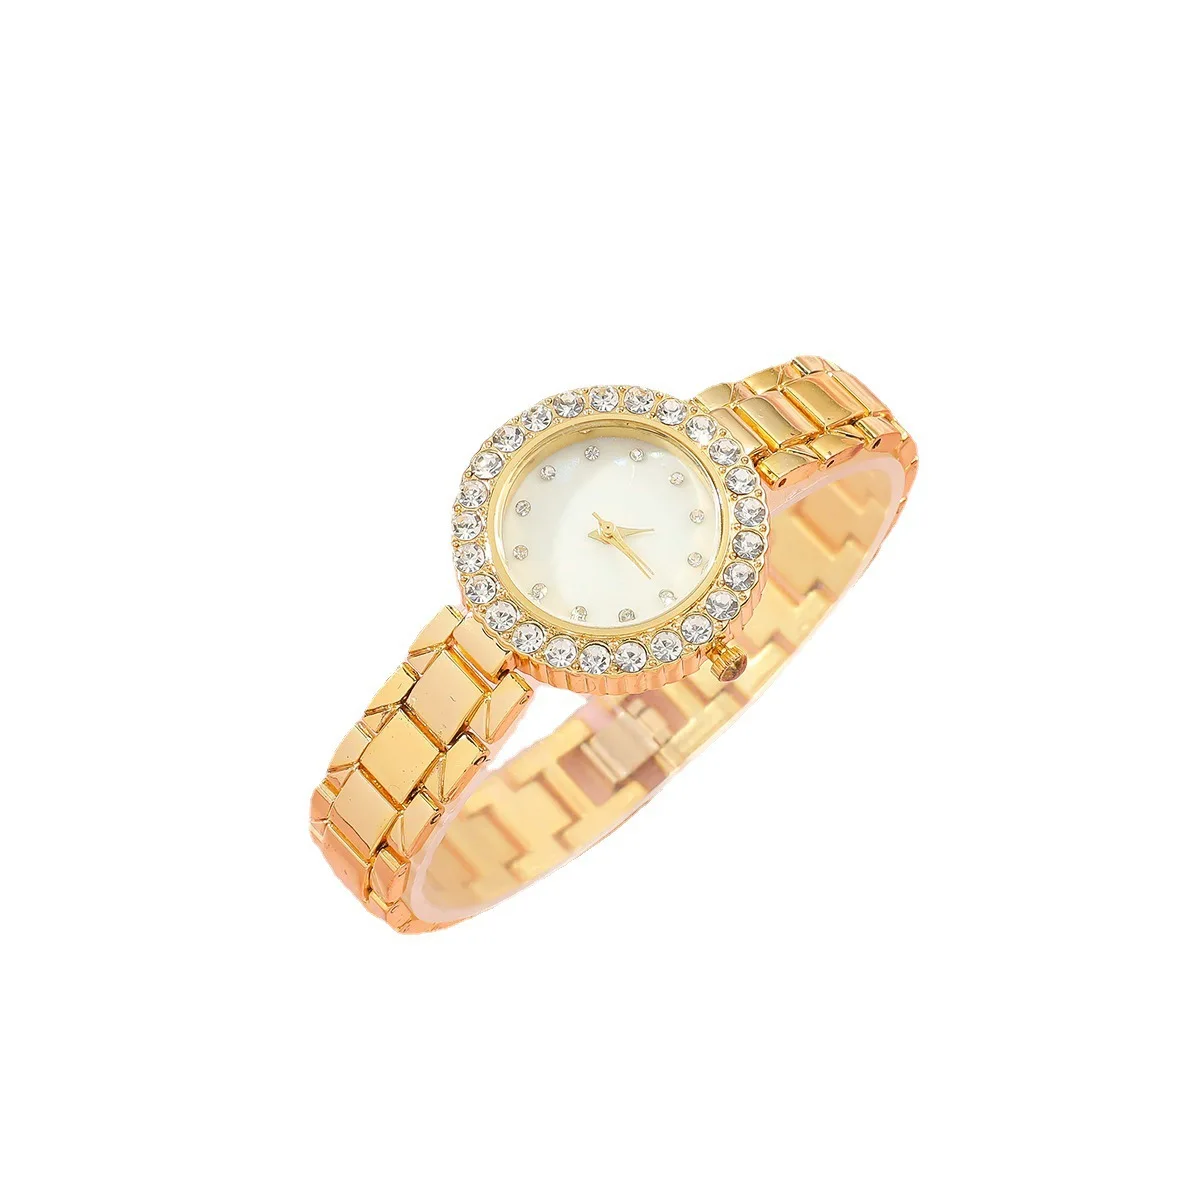 5pcs/set zircon earrings necklace jewelry set Stainless steel gold women's watch Simple jewelry accessory gift